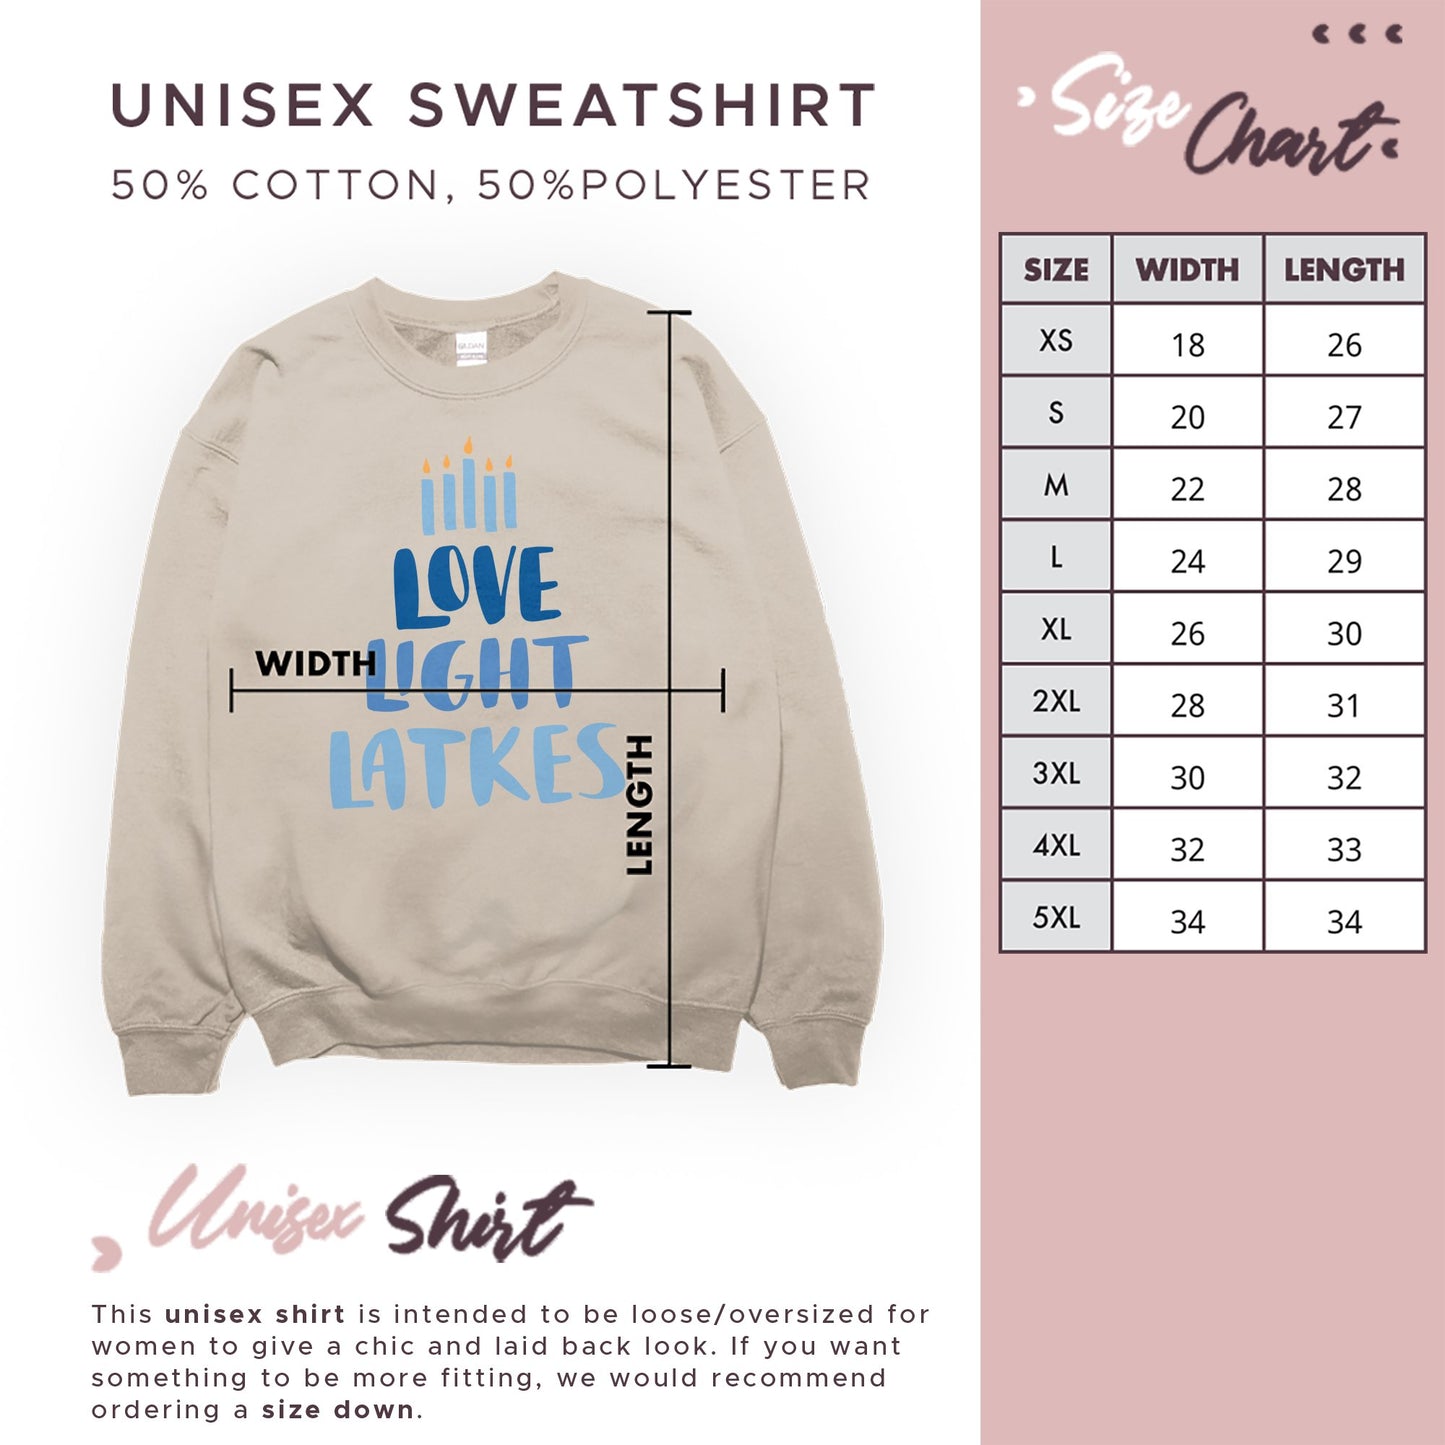 Hanukkah Sweatshirt, Love Light Latkes - Mardonyx Sweatshirt